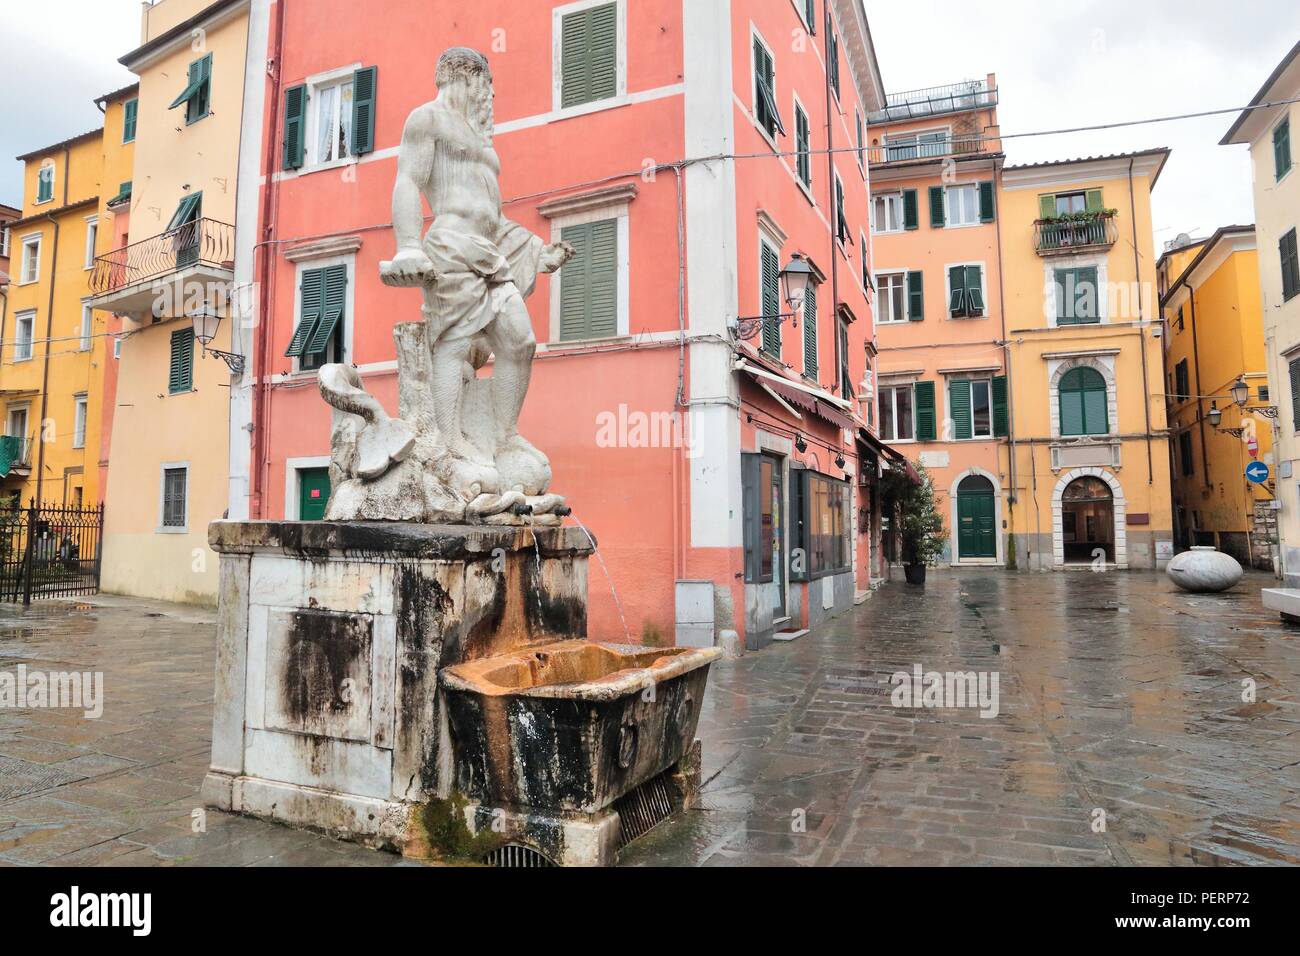 Carrara, Italy - Old Town in the region of Tuscany. Stock Photo